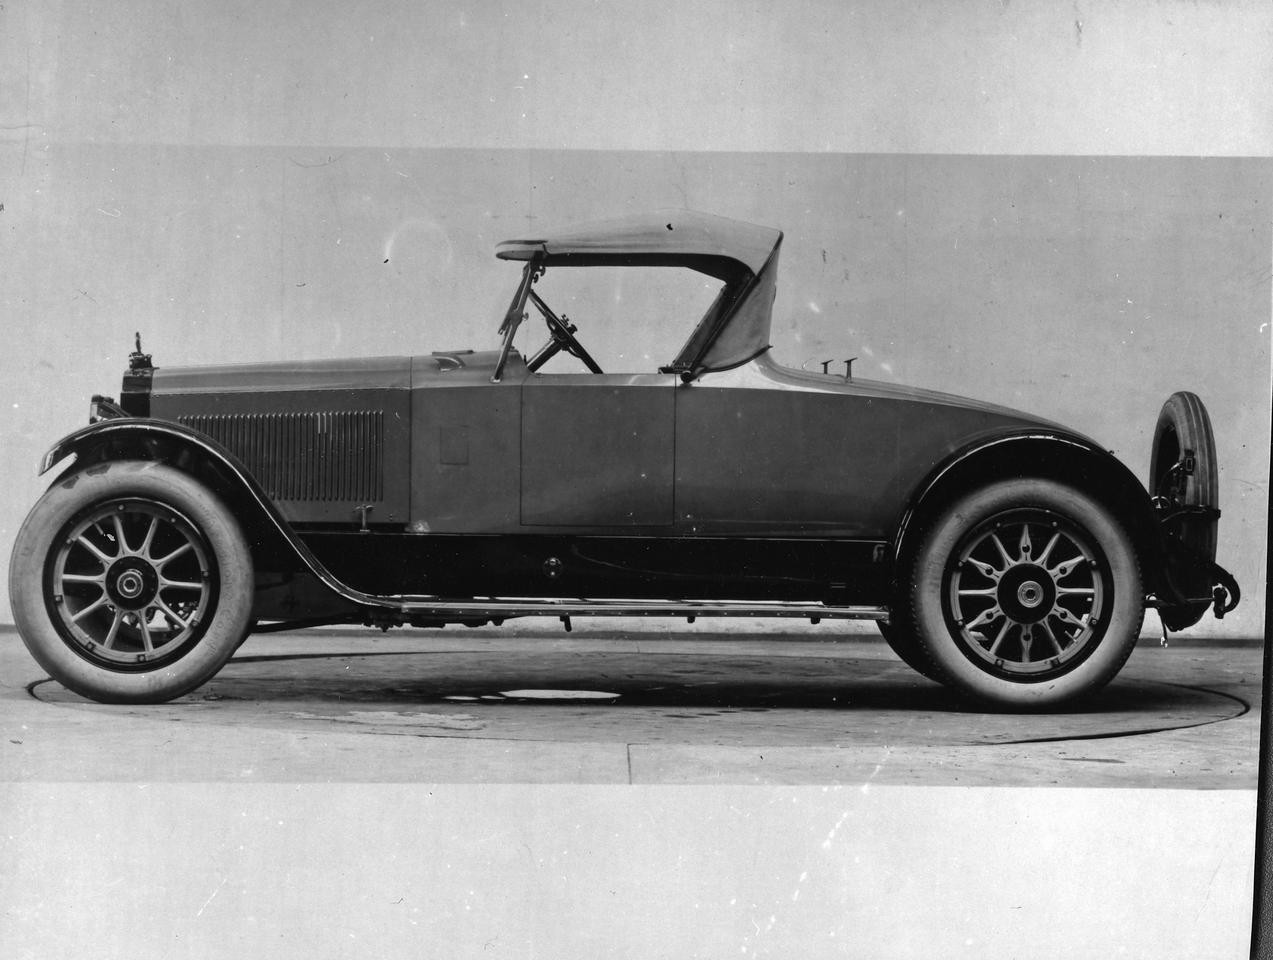 Packard Twin Six Roadster Wallpapers